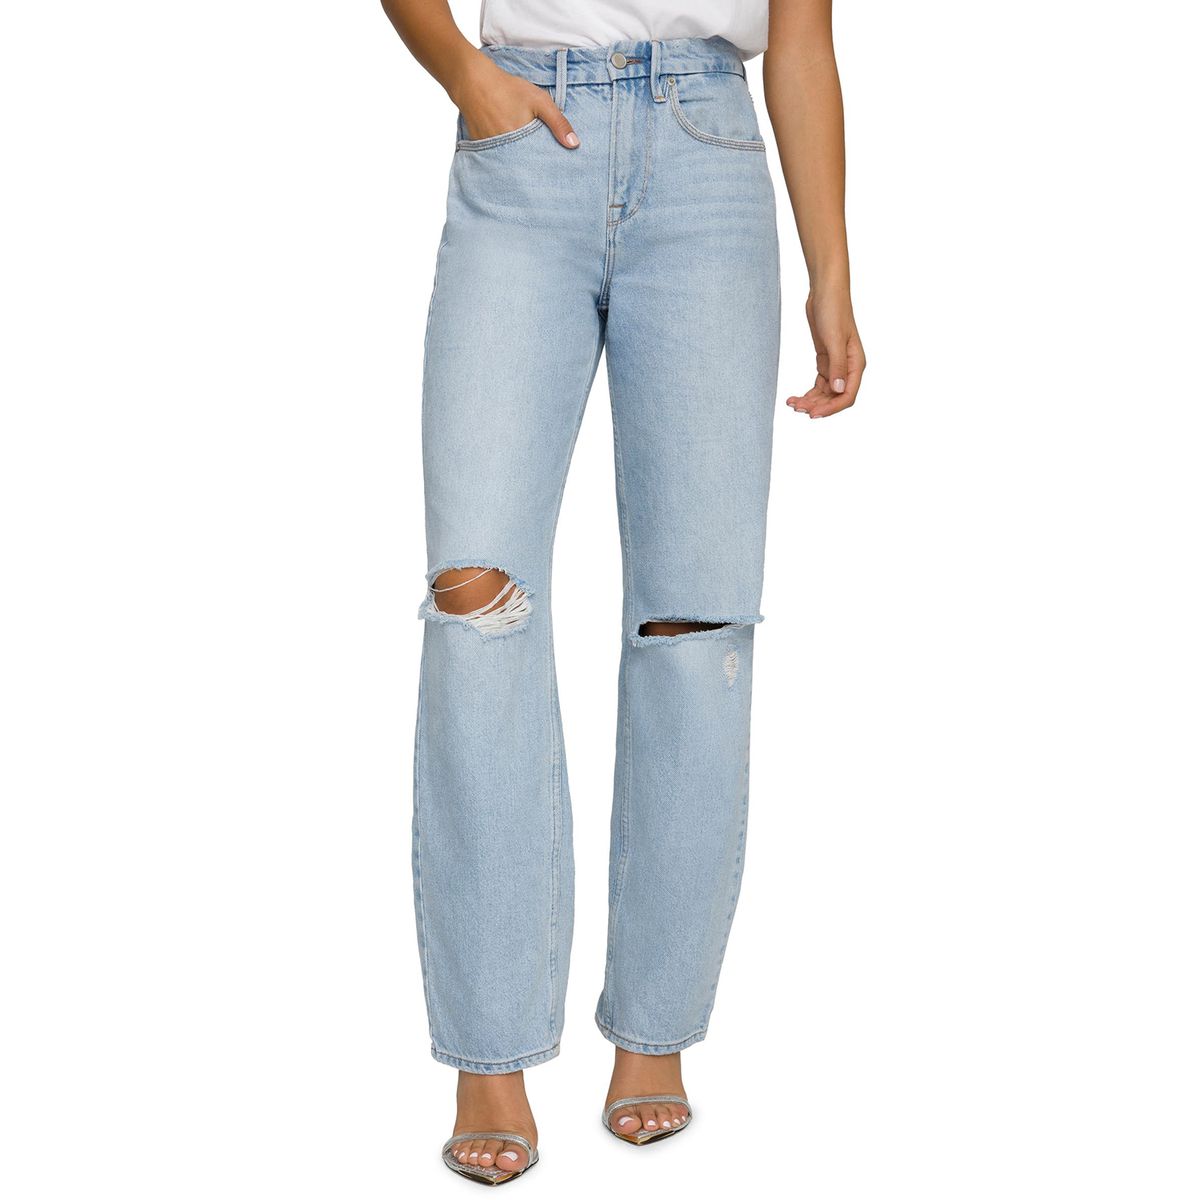 Megan Fox Good American Jeans Sale